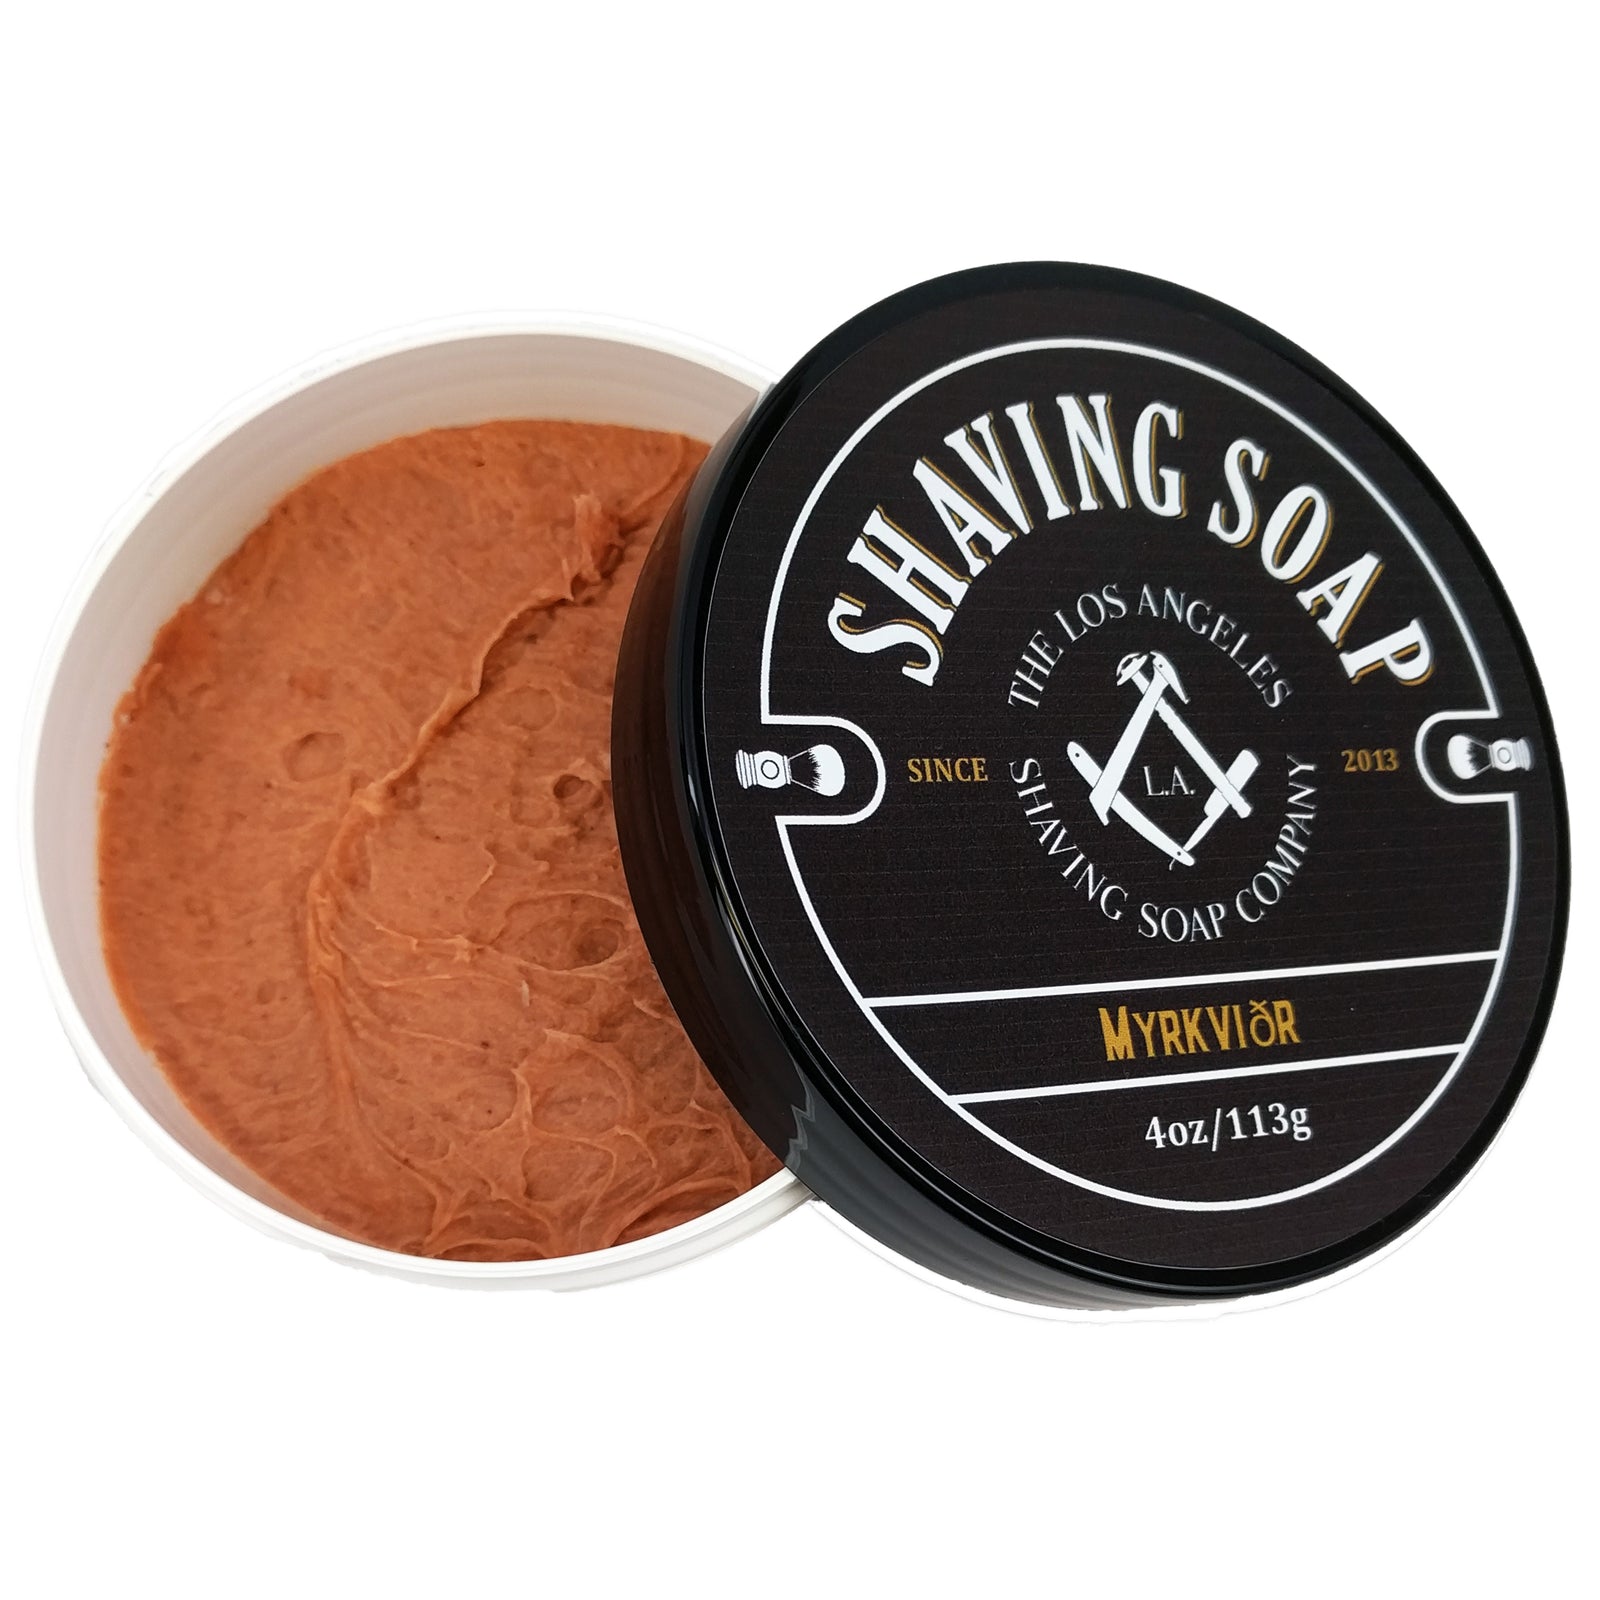 LA Shaving Soap Co – Myrkvidr Shaving Soap